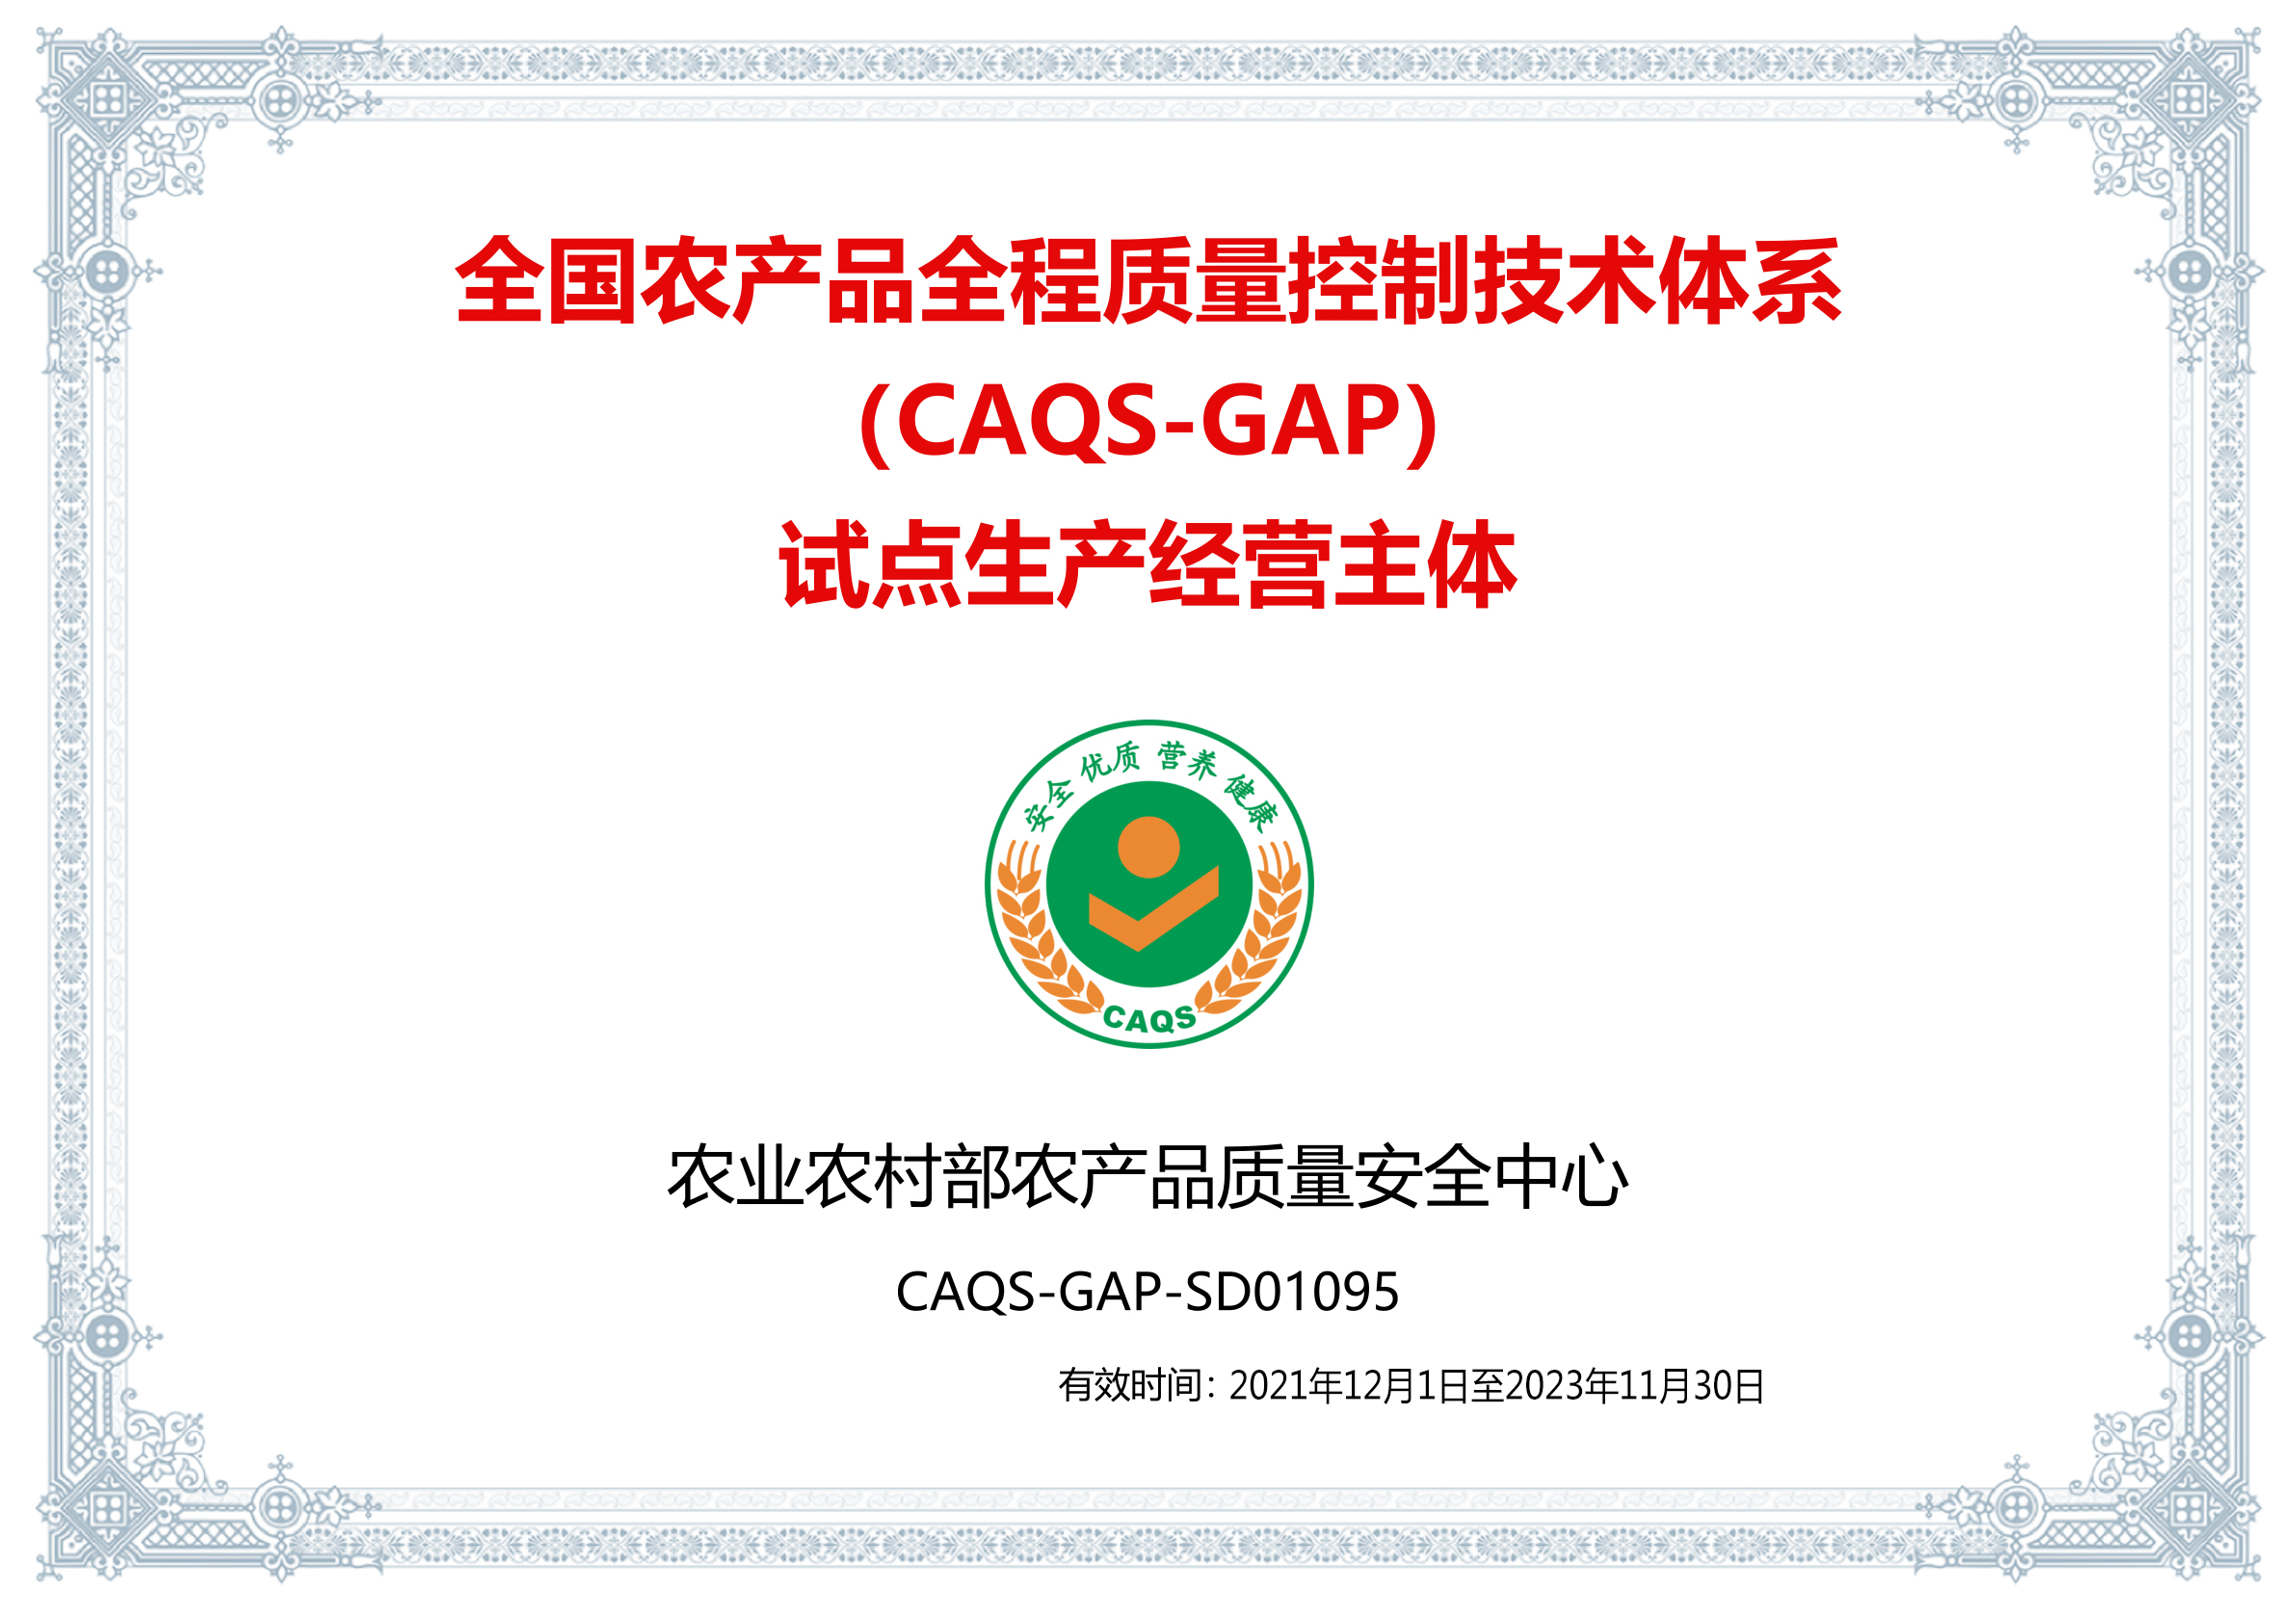 CAQS-GAP试点生产经营主体(图1)